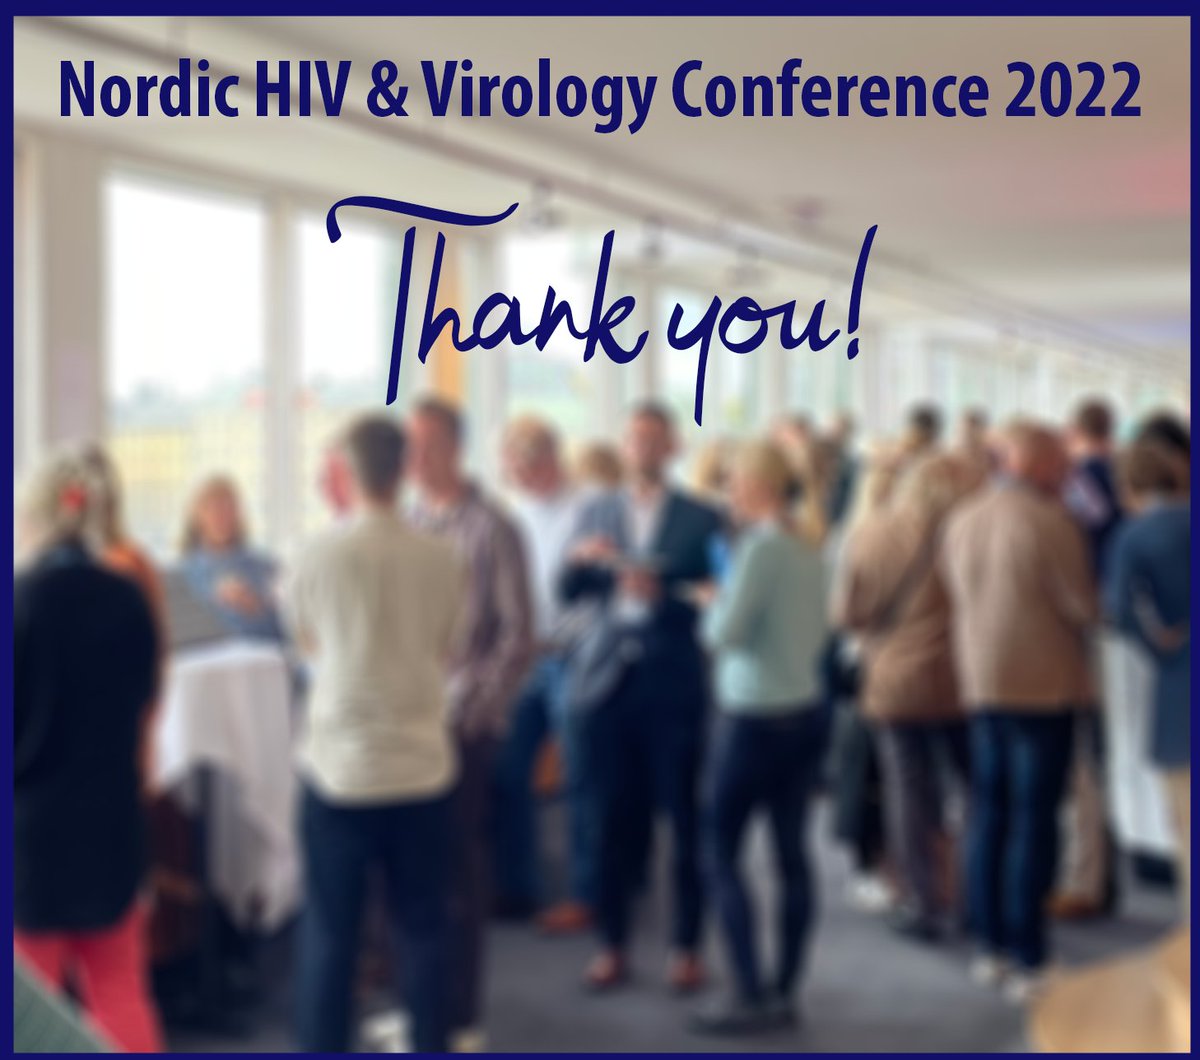 MediahusetGbg: Thank you all for attending Nordic HIV & Virology Confer...